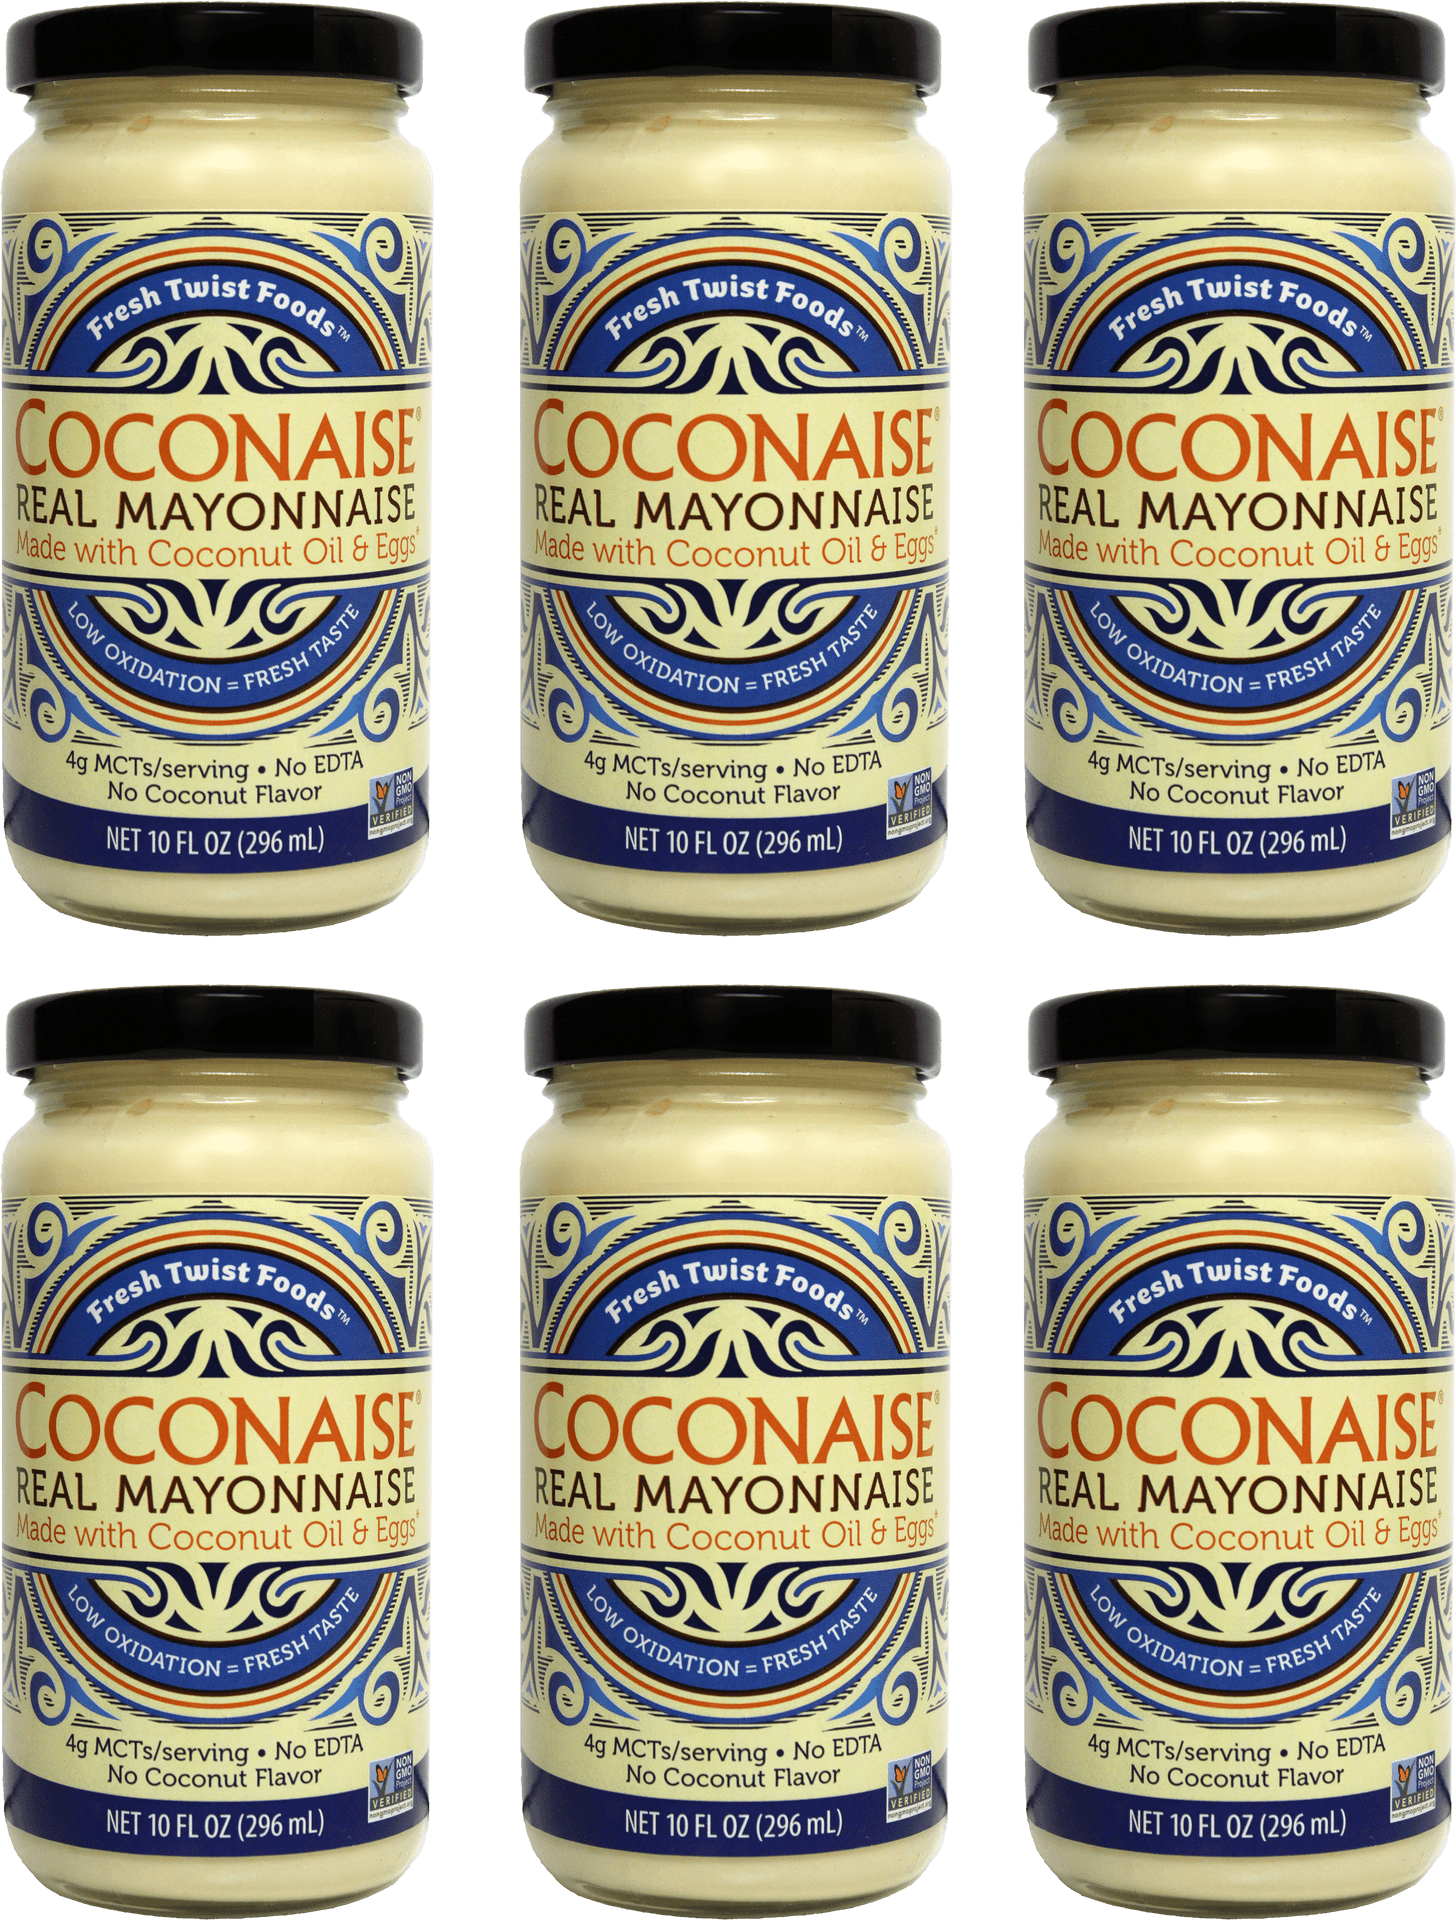 Coconaise Mayonnaise Jars PNG image